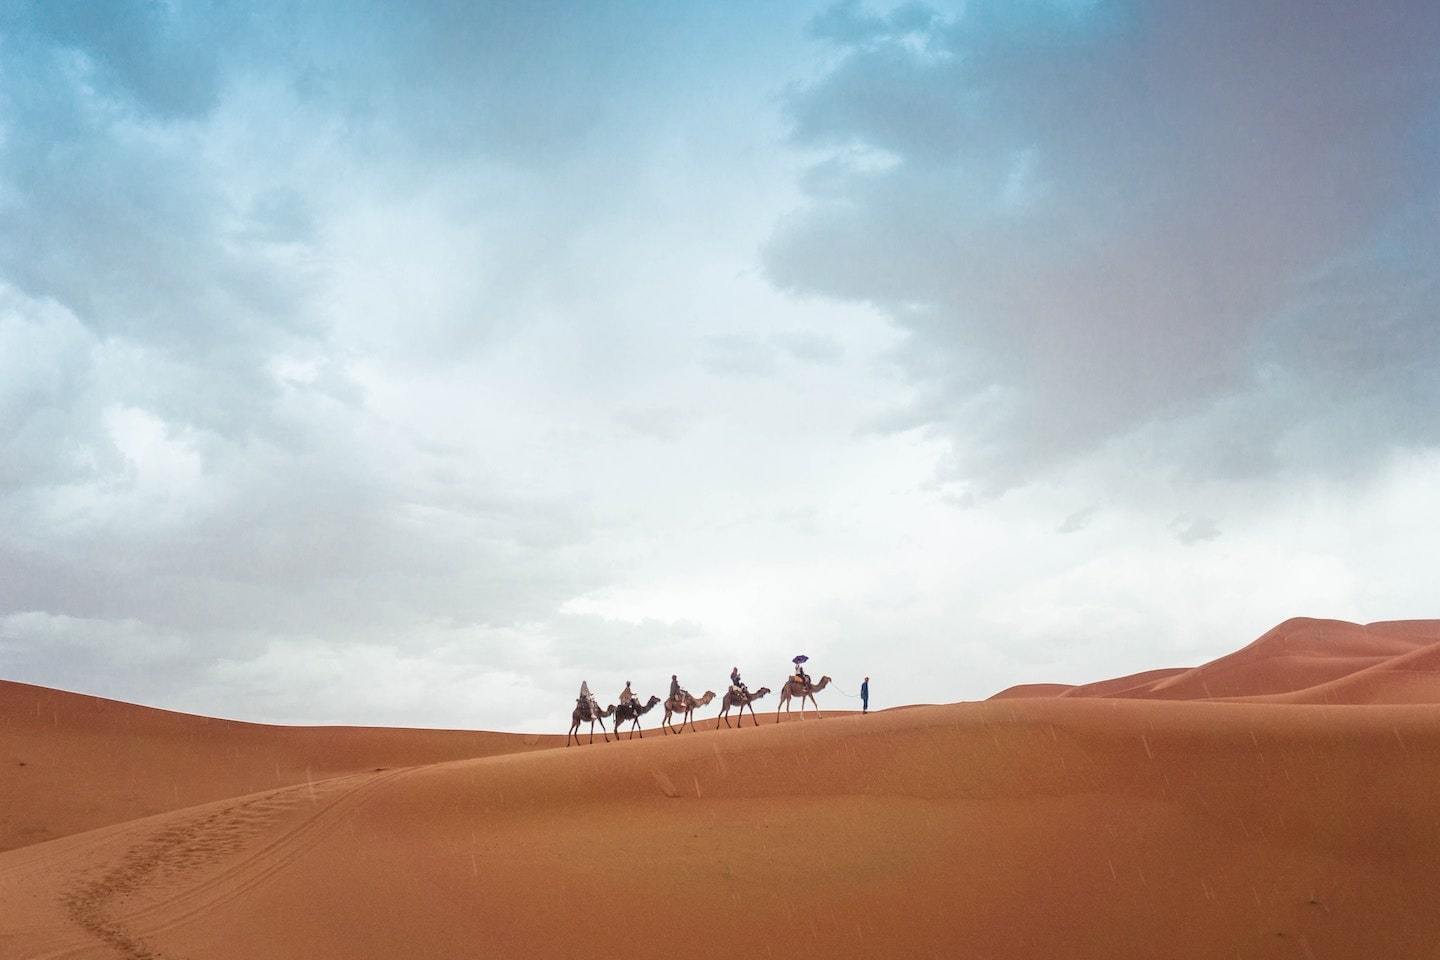 camels walking in desert under cloudy blue sky